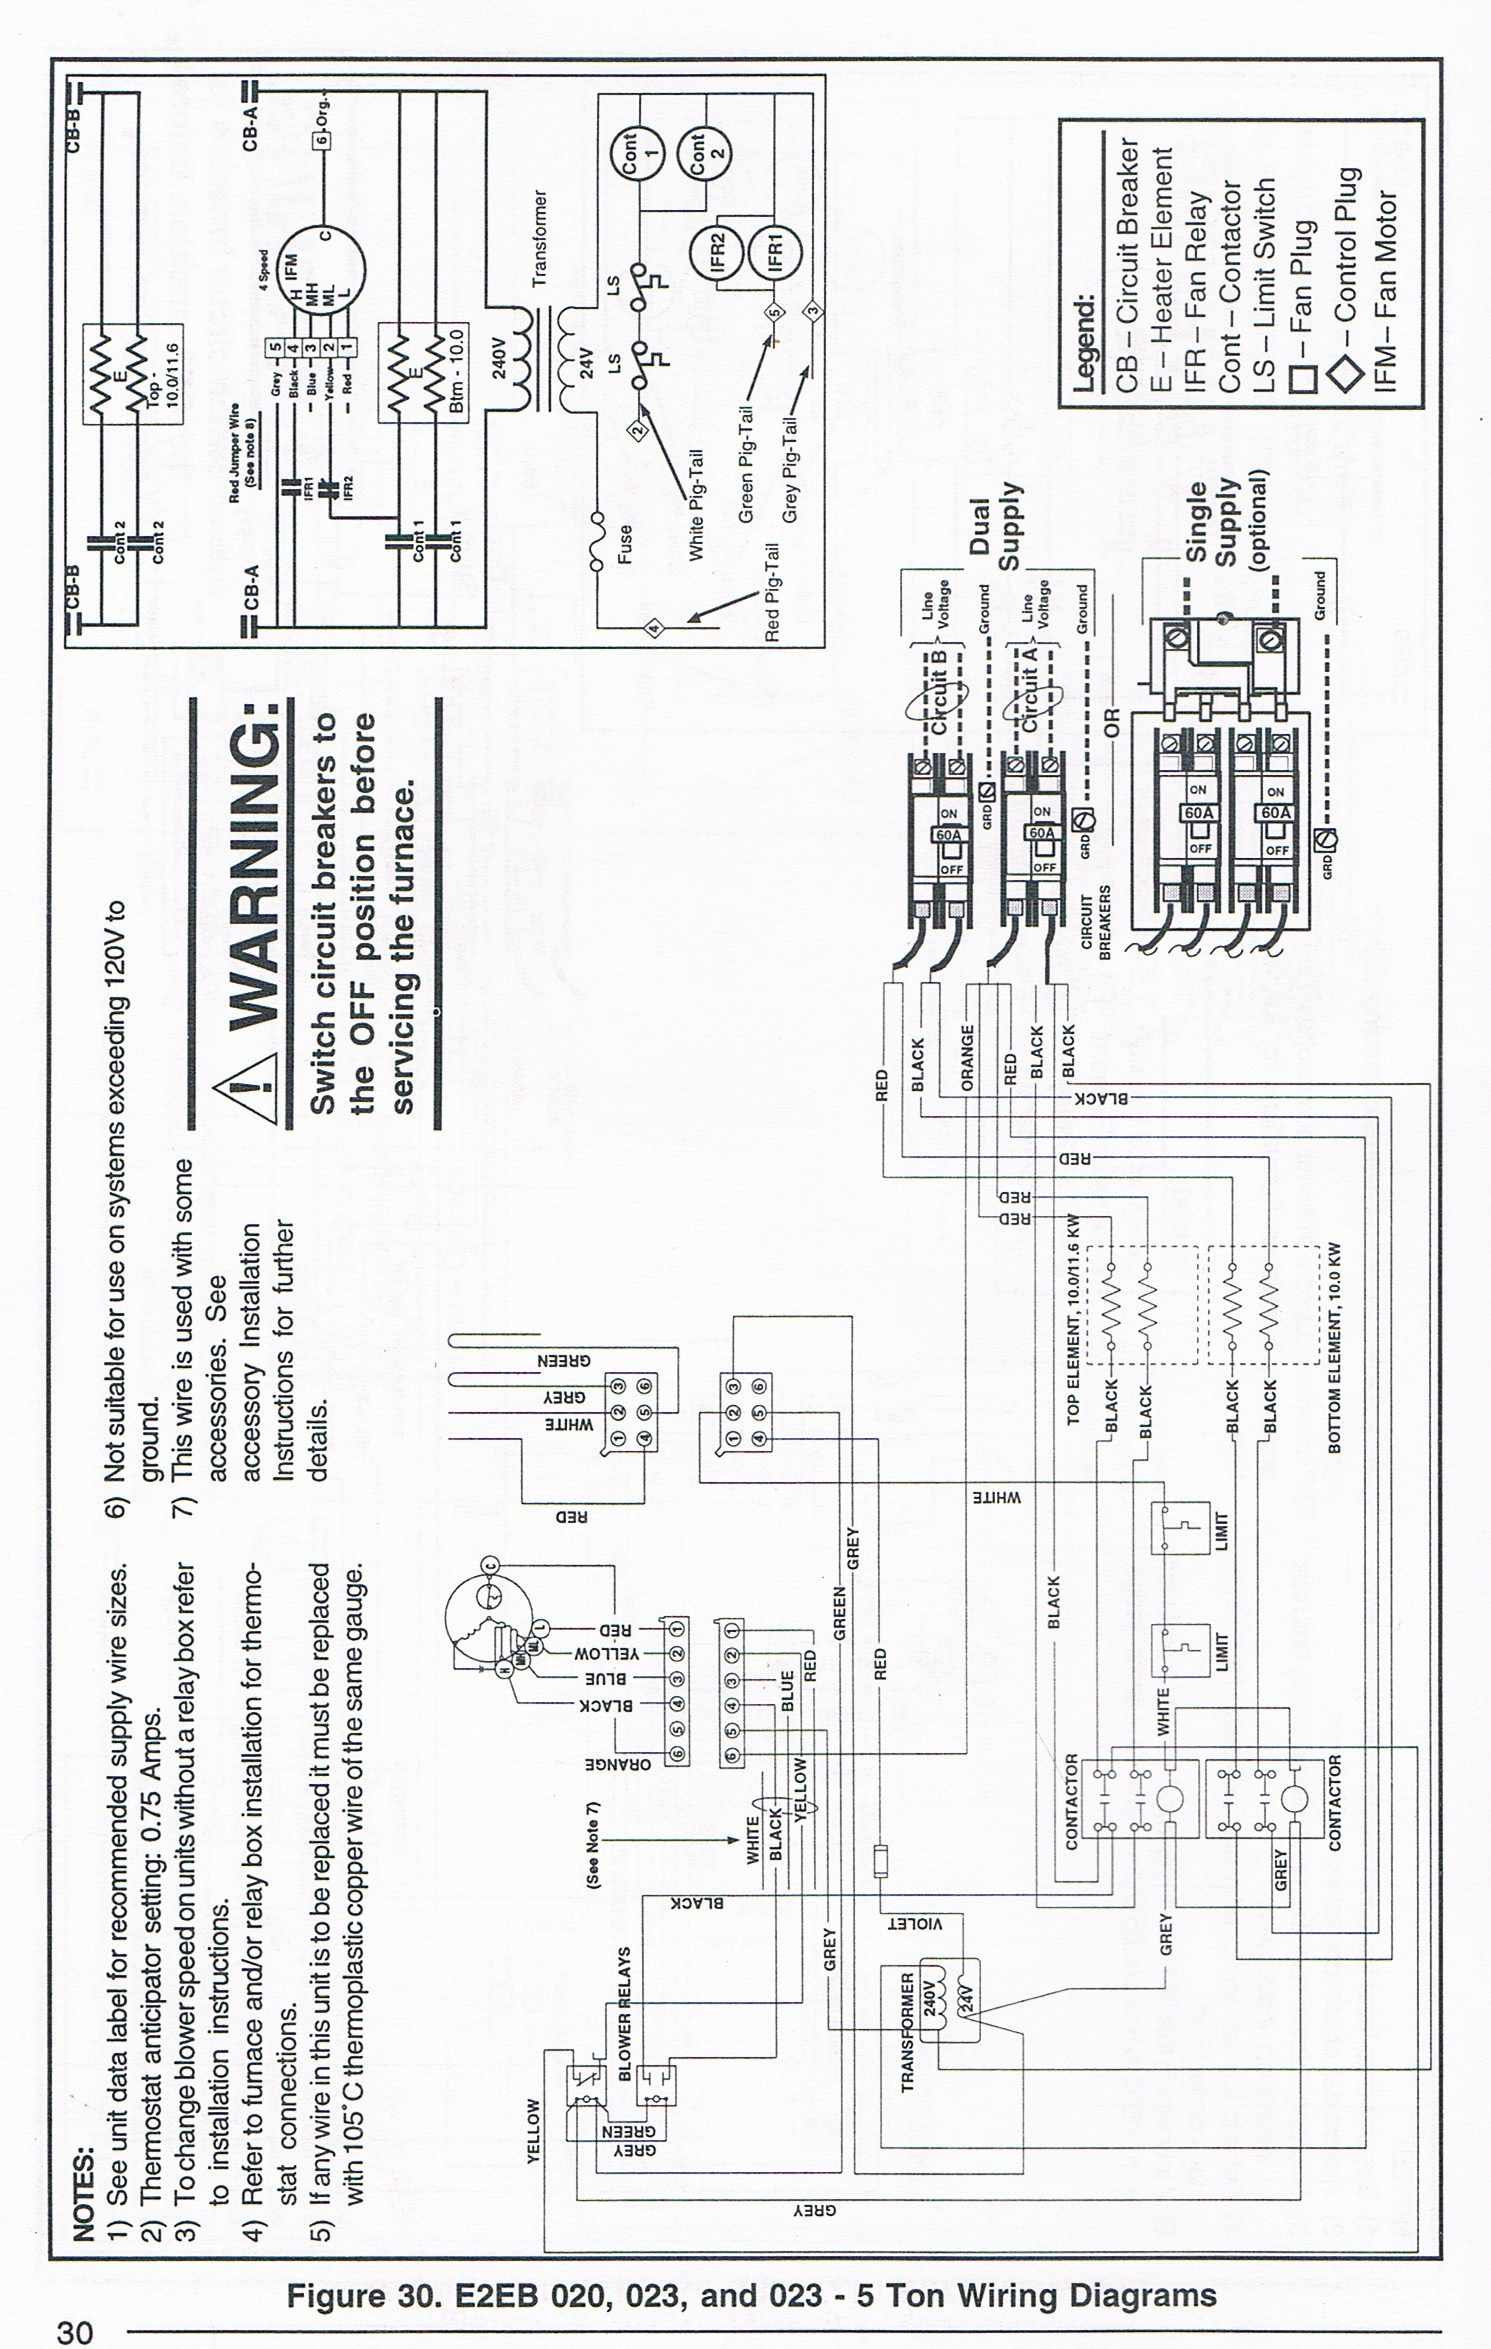 York Heat Pump Wiring Diagrams Readingrat Net In For Diagram Goodman - Electric Furnace Wiring Diagram